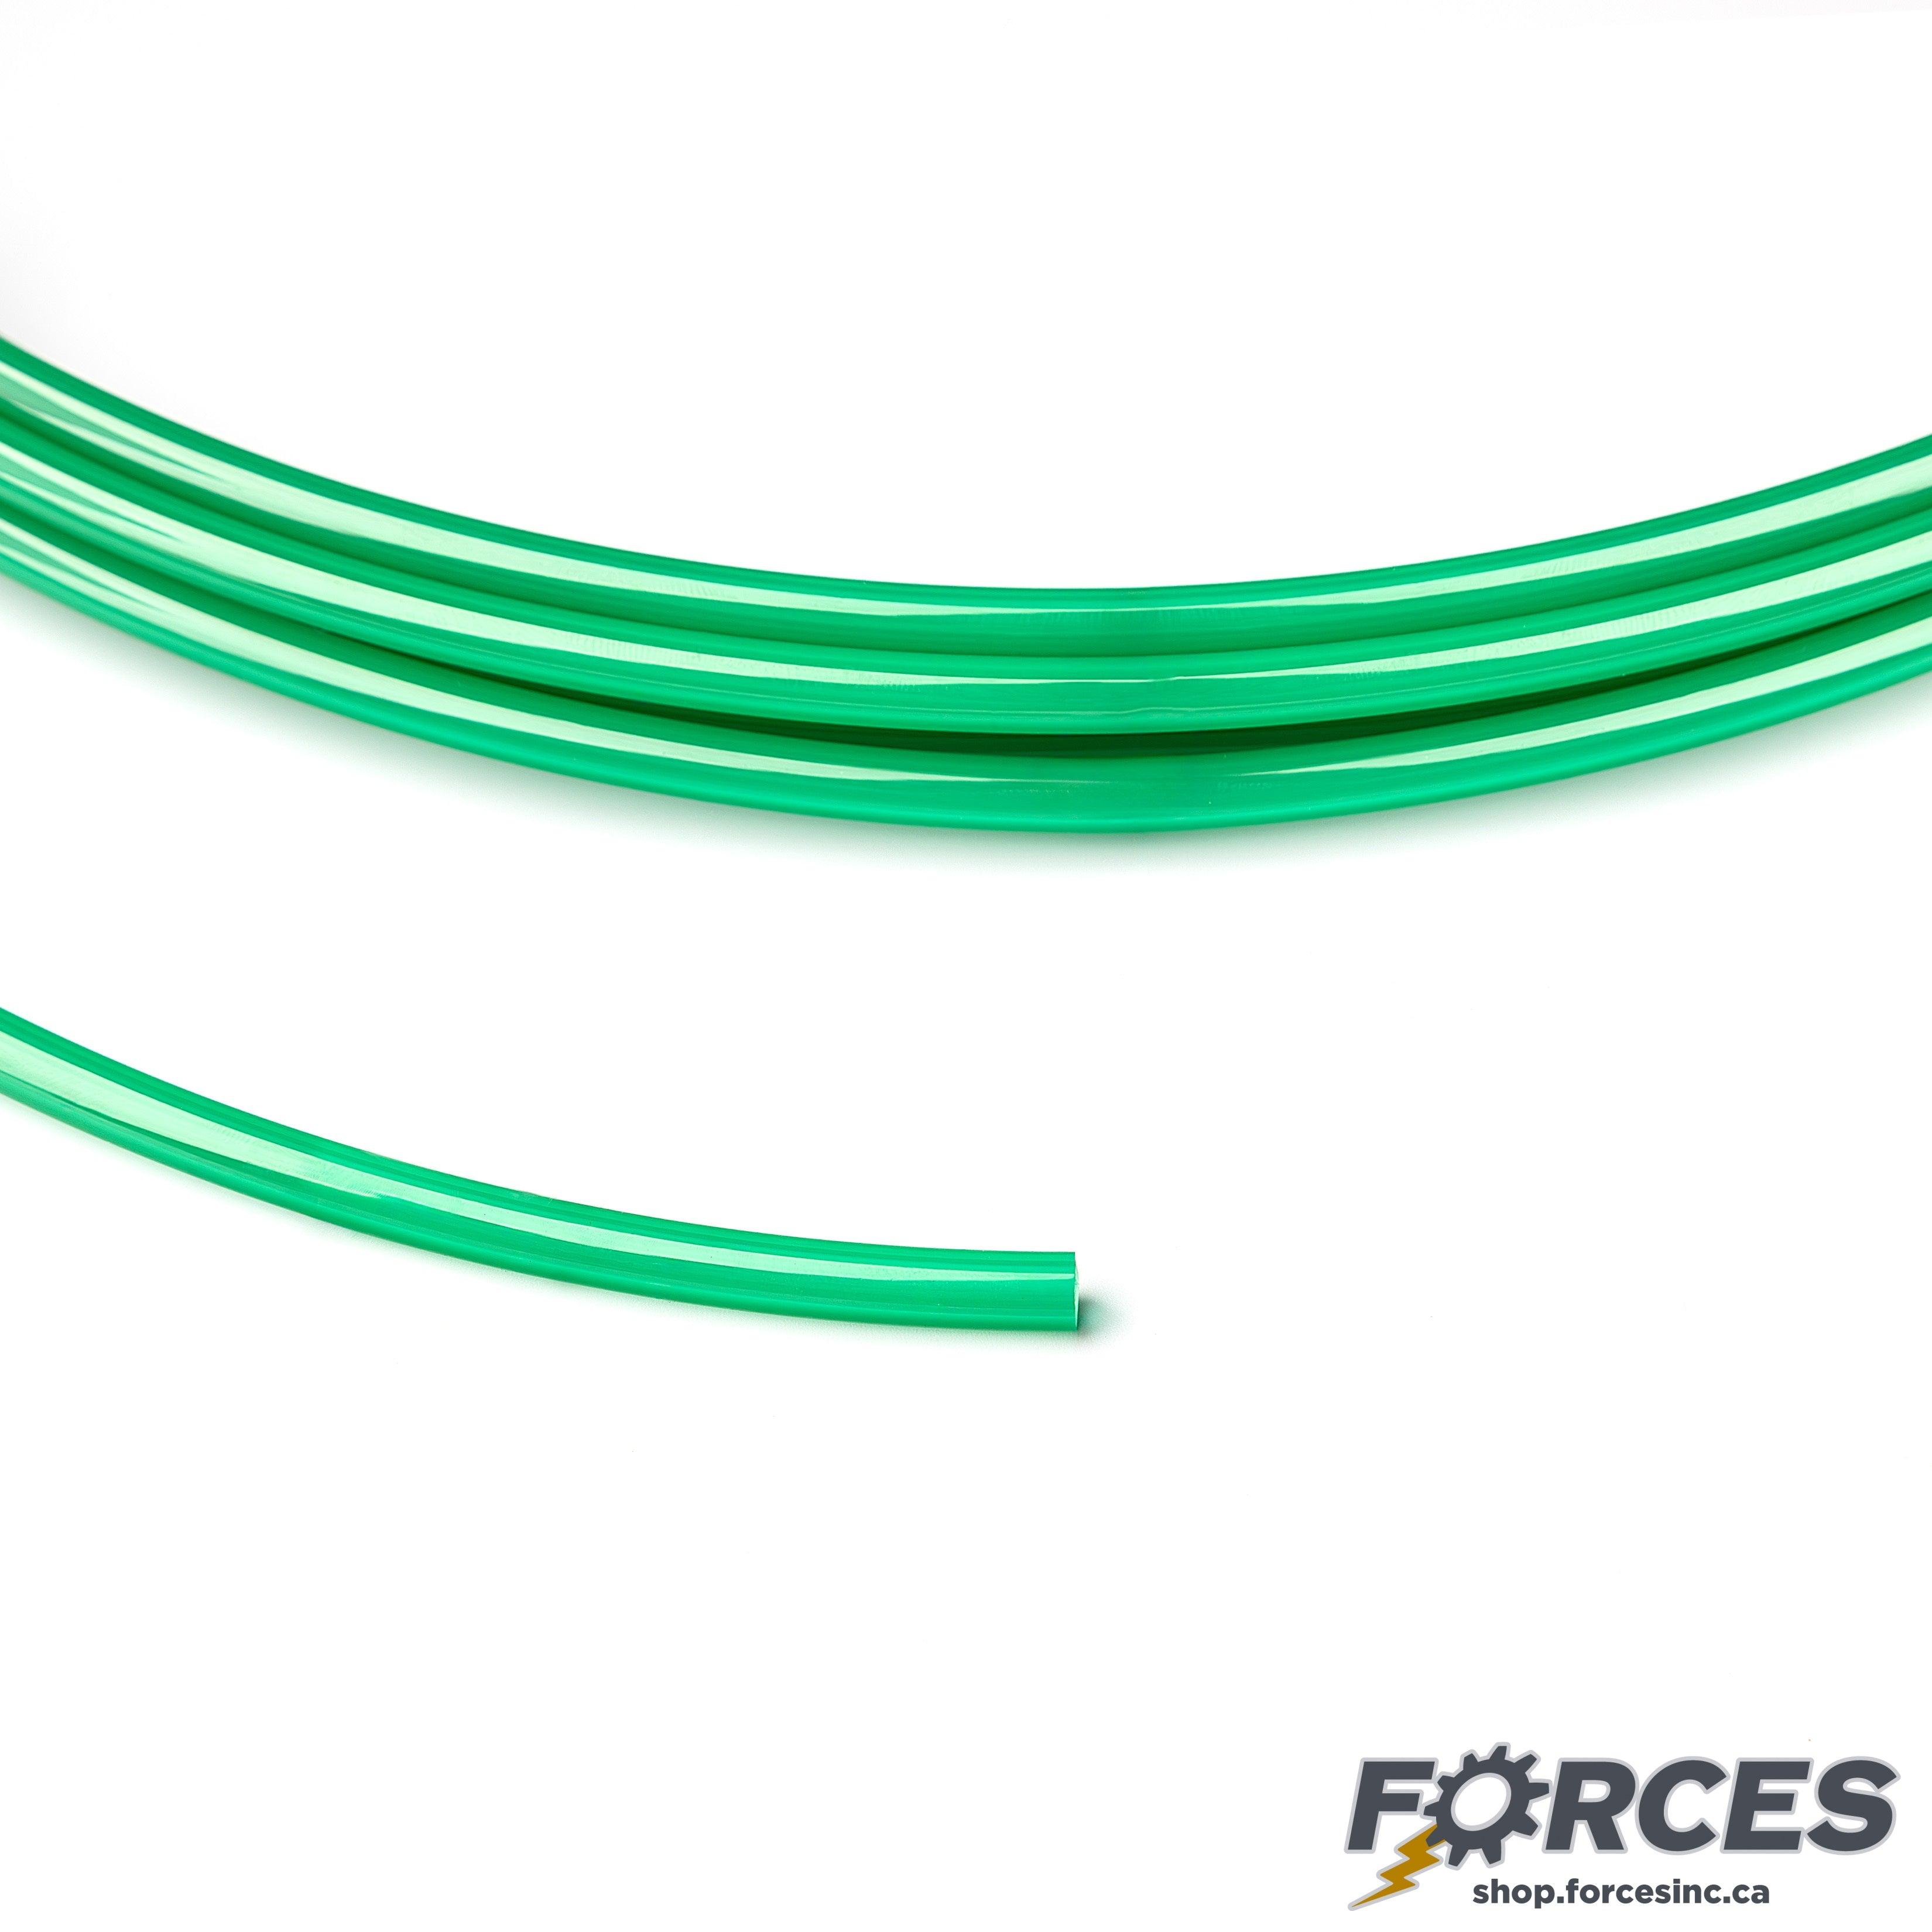 Pneumatic Air Tubing 10mm x 6.5mm Green Polyurethane - 330ft - Forces Inc